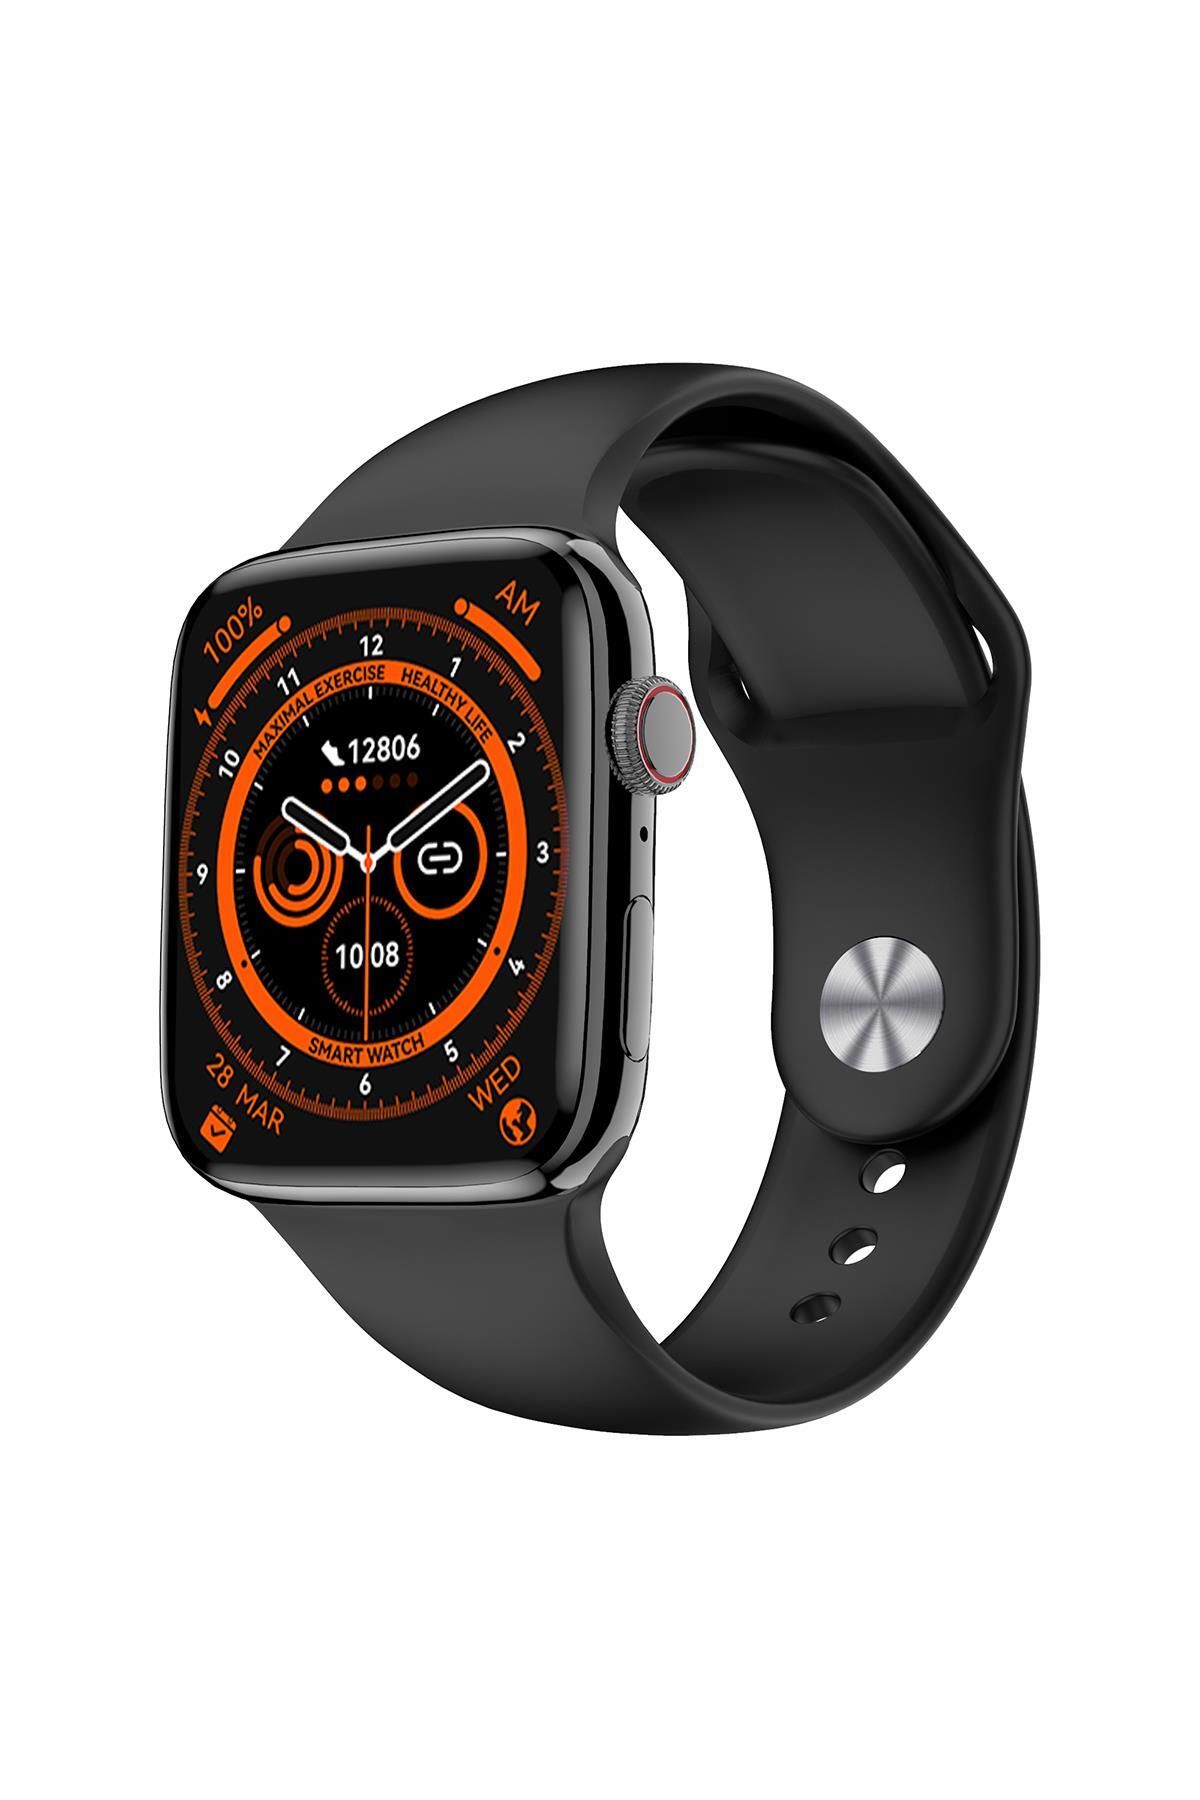 Black Dice Watch 8 Pro Max Ultra Donanımlı Akıllı Saat Segmentin En Iyisi